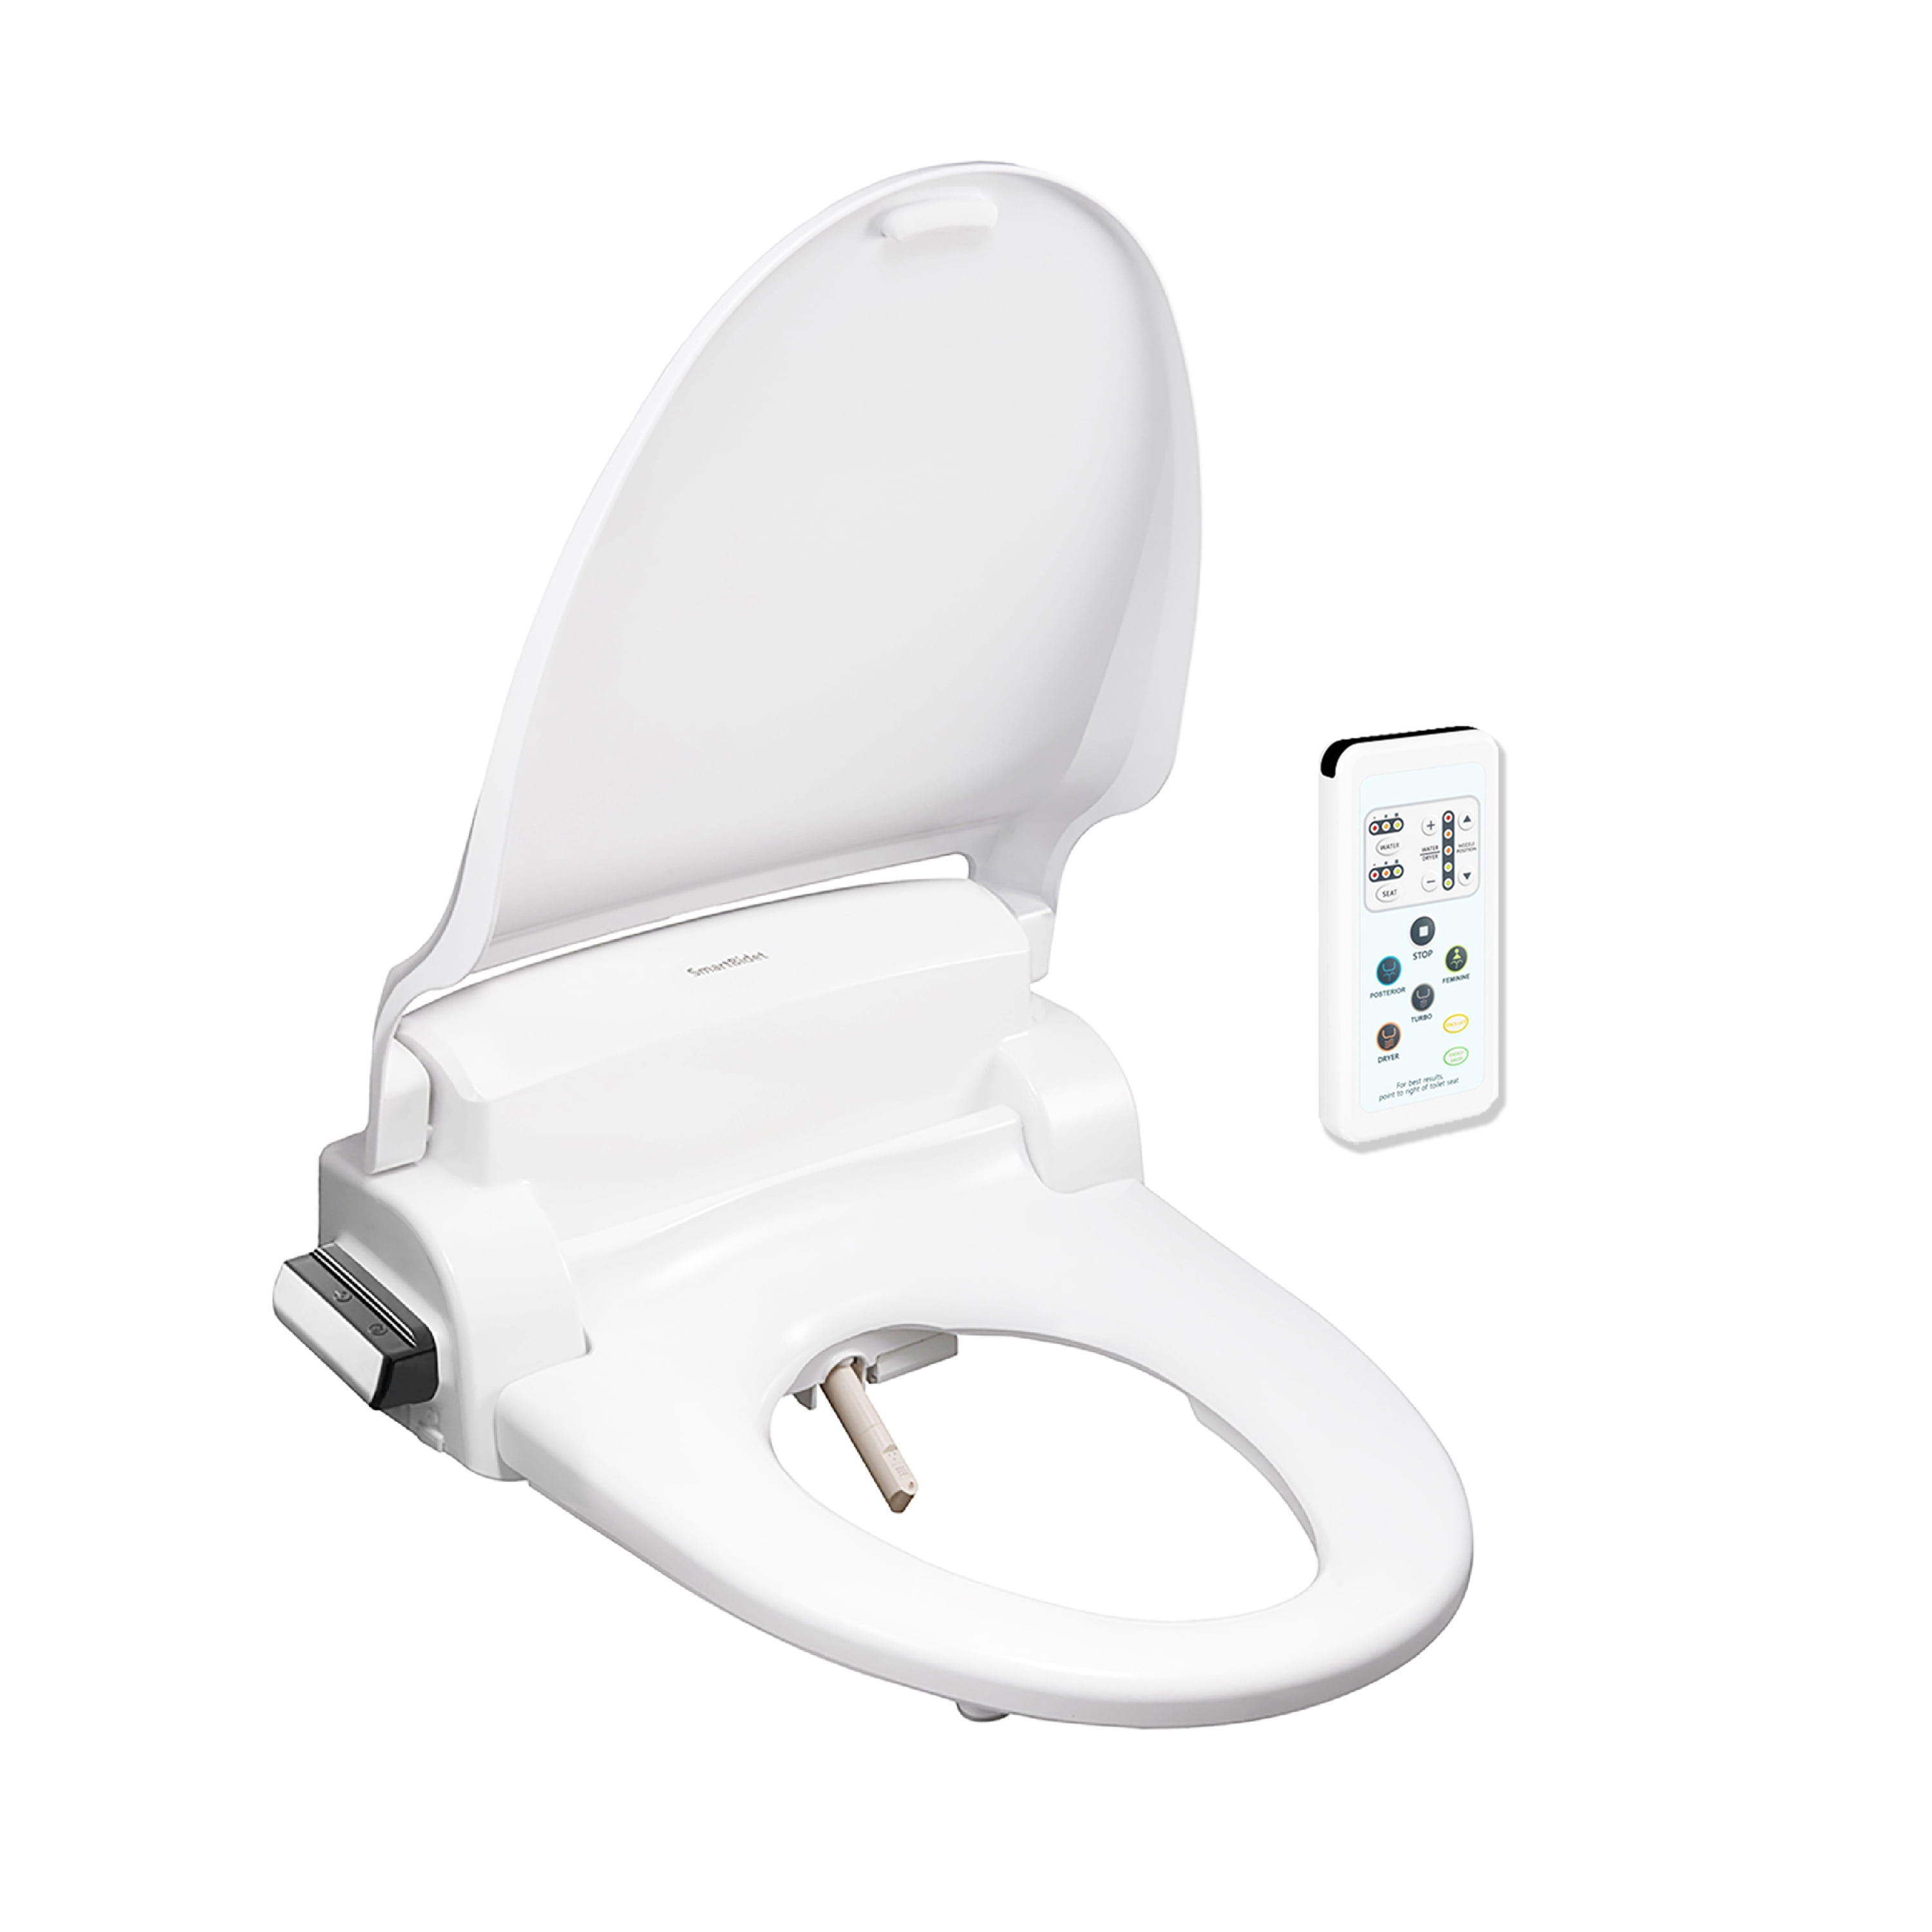 Details about   Smart Toilet Seat Electric Bidet Cover Intelligent Heat Clean Dry Massage Care 